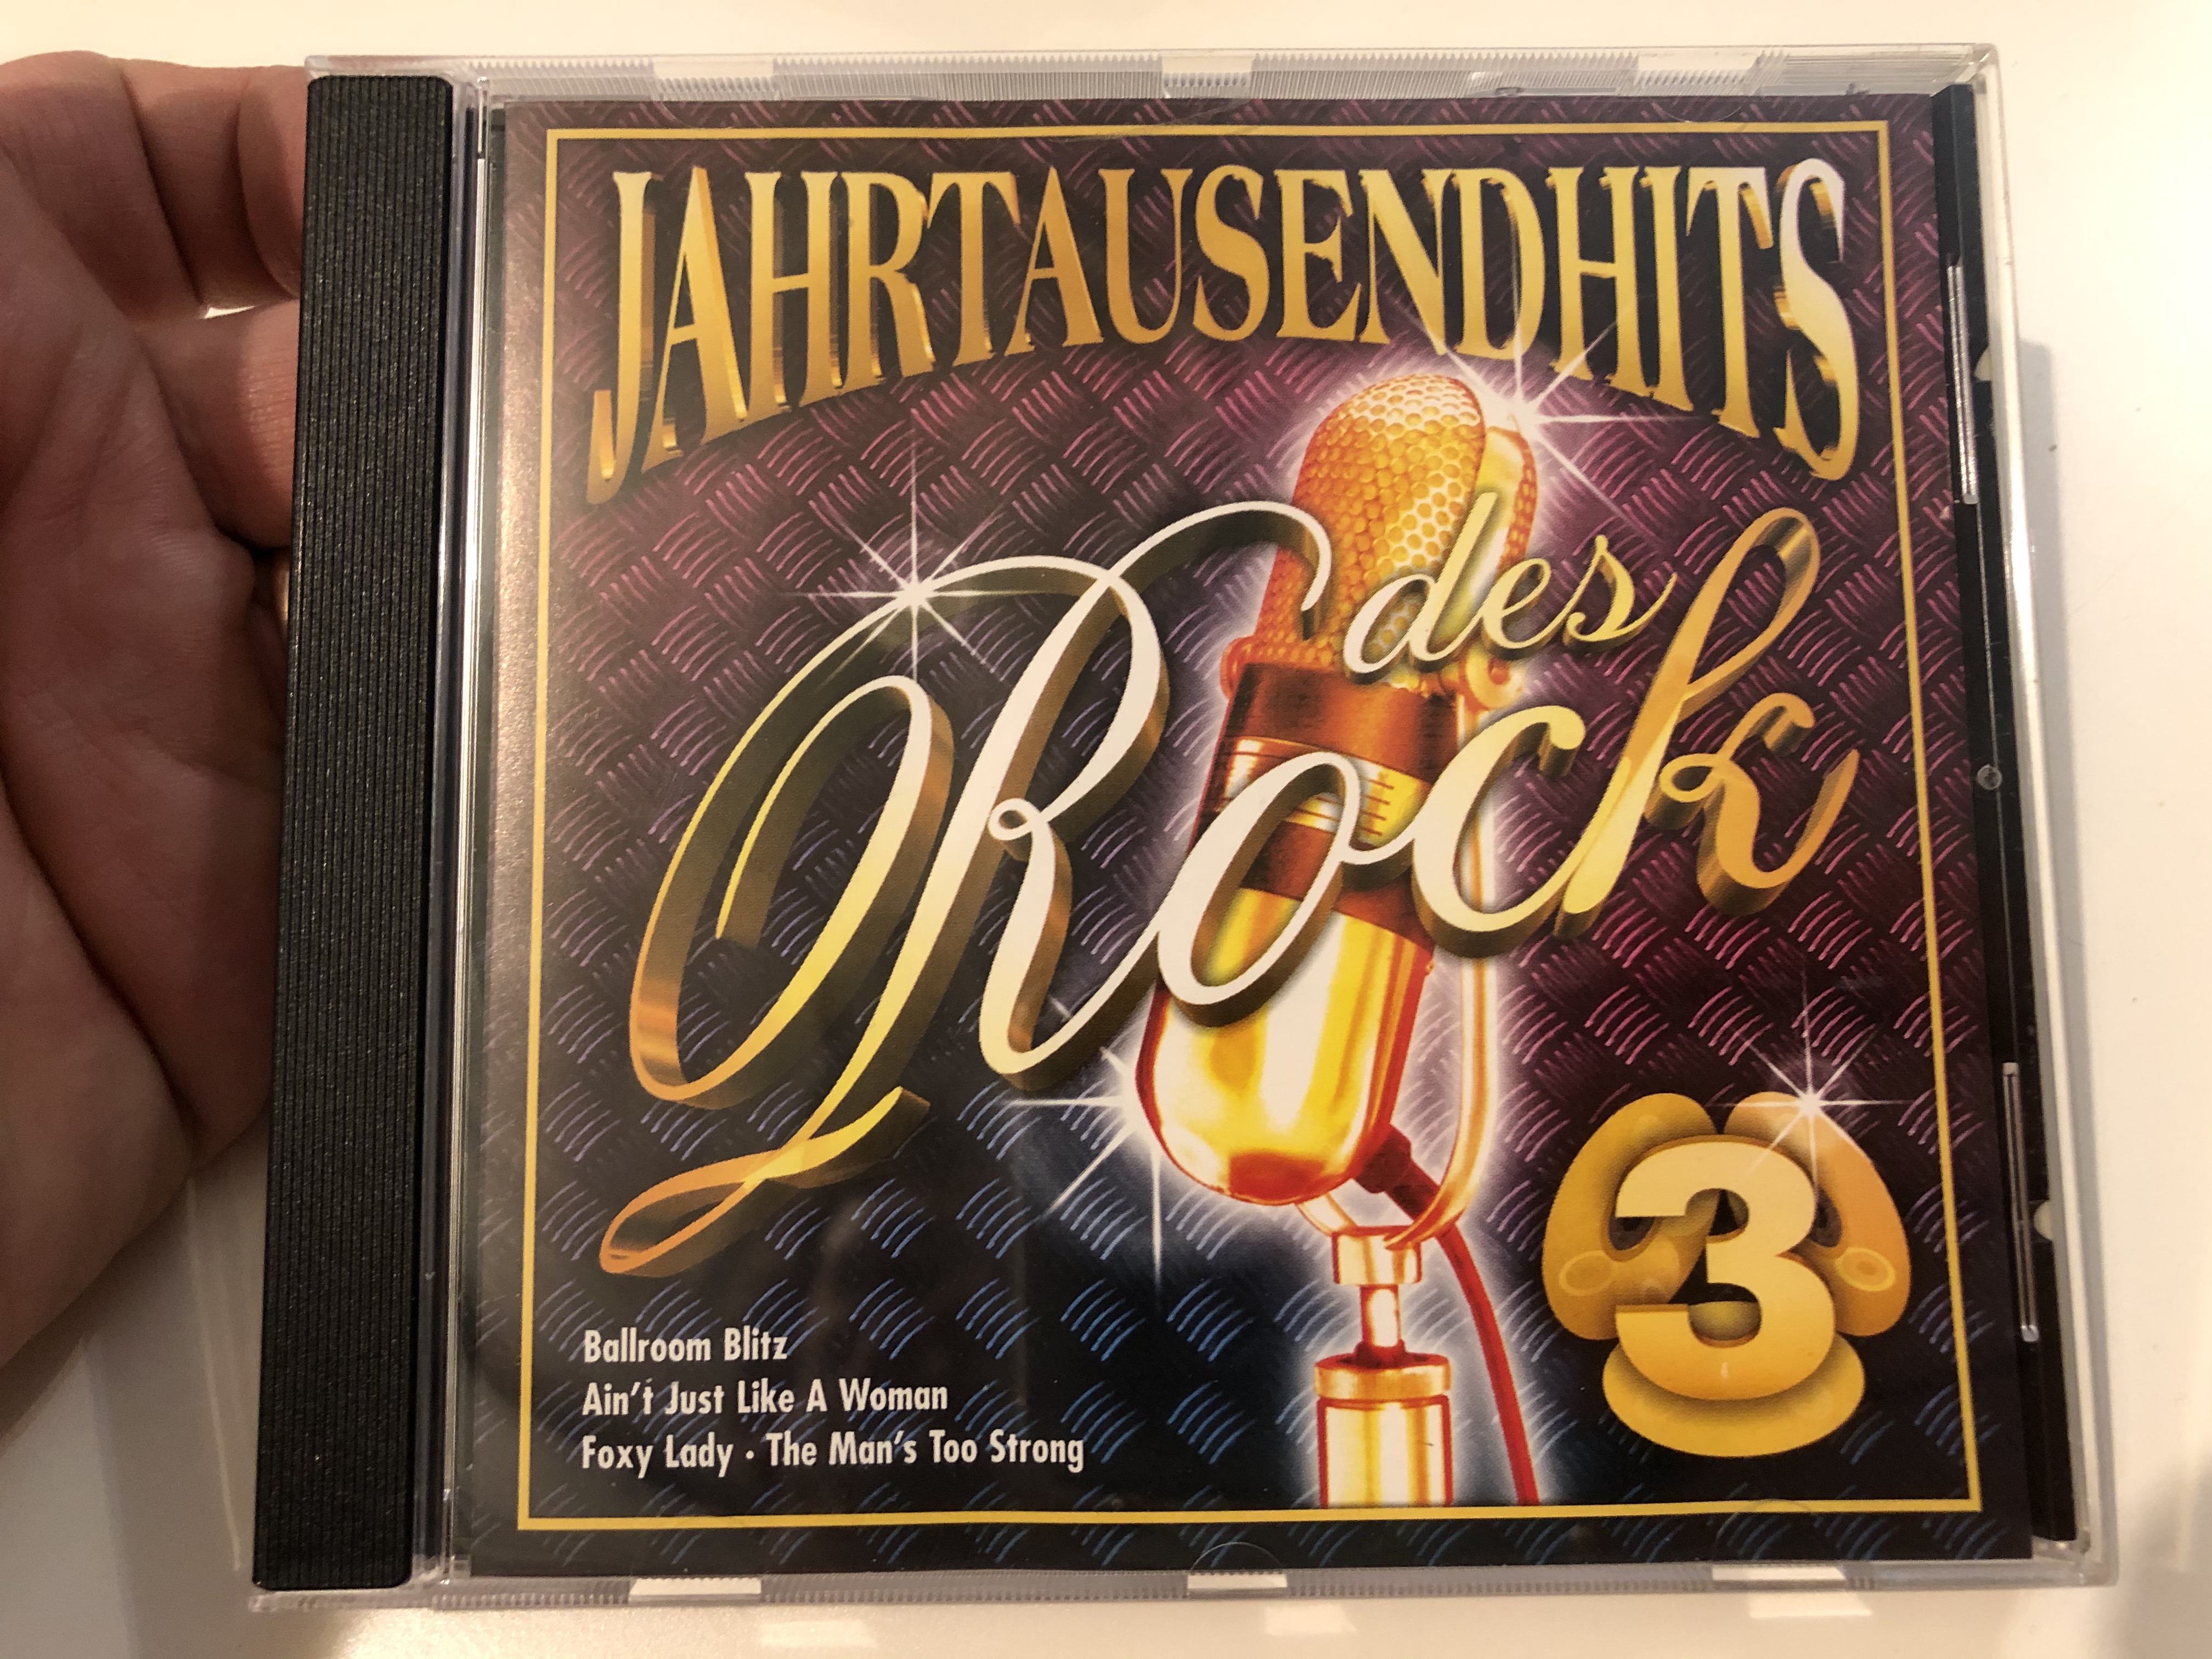 jahrtausendhits-des-rock-3-ballroom-blitz-ain-t-just-like-a-woman-foxy-lady-the-man-s-too-strong-eurotrend-audio-cd-cd-154-1-.jpg